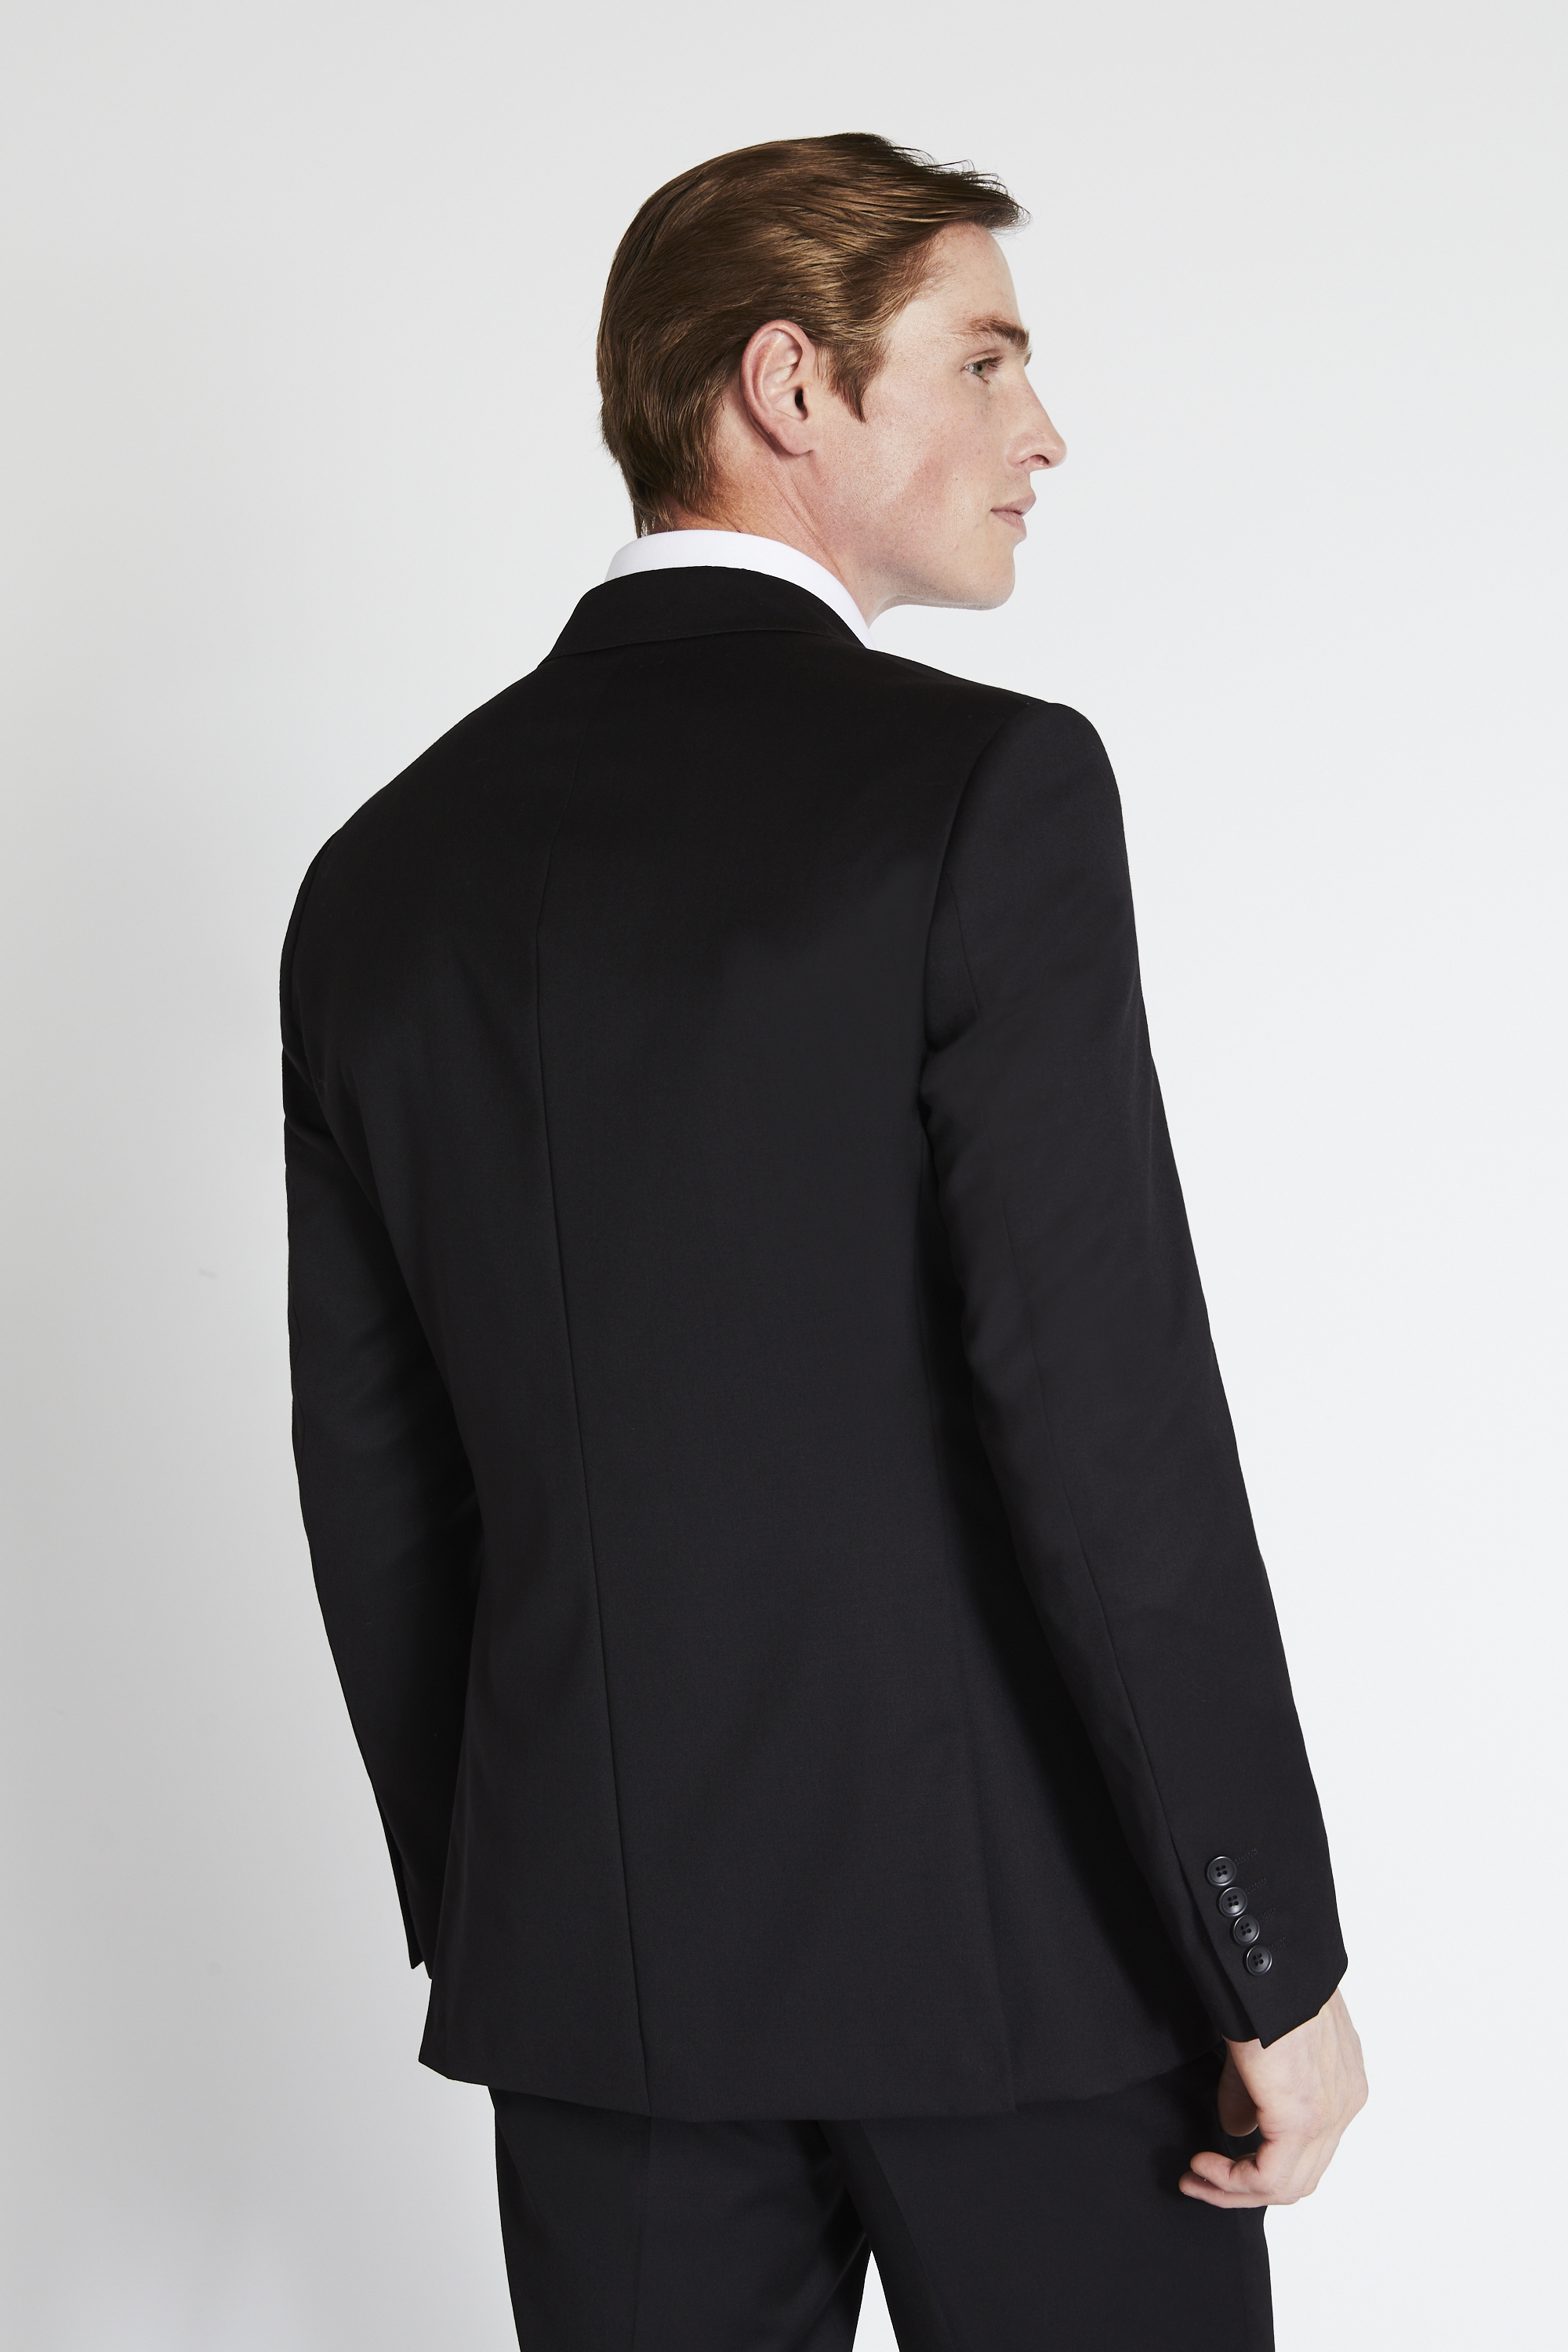 Regular Fit Black Twill Jacket | Buy Online at Moss